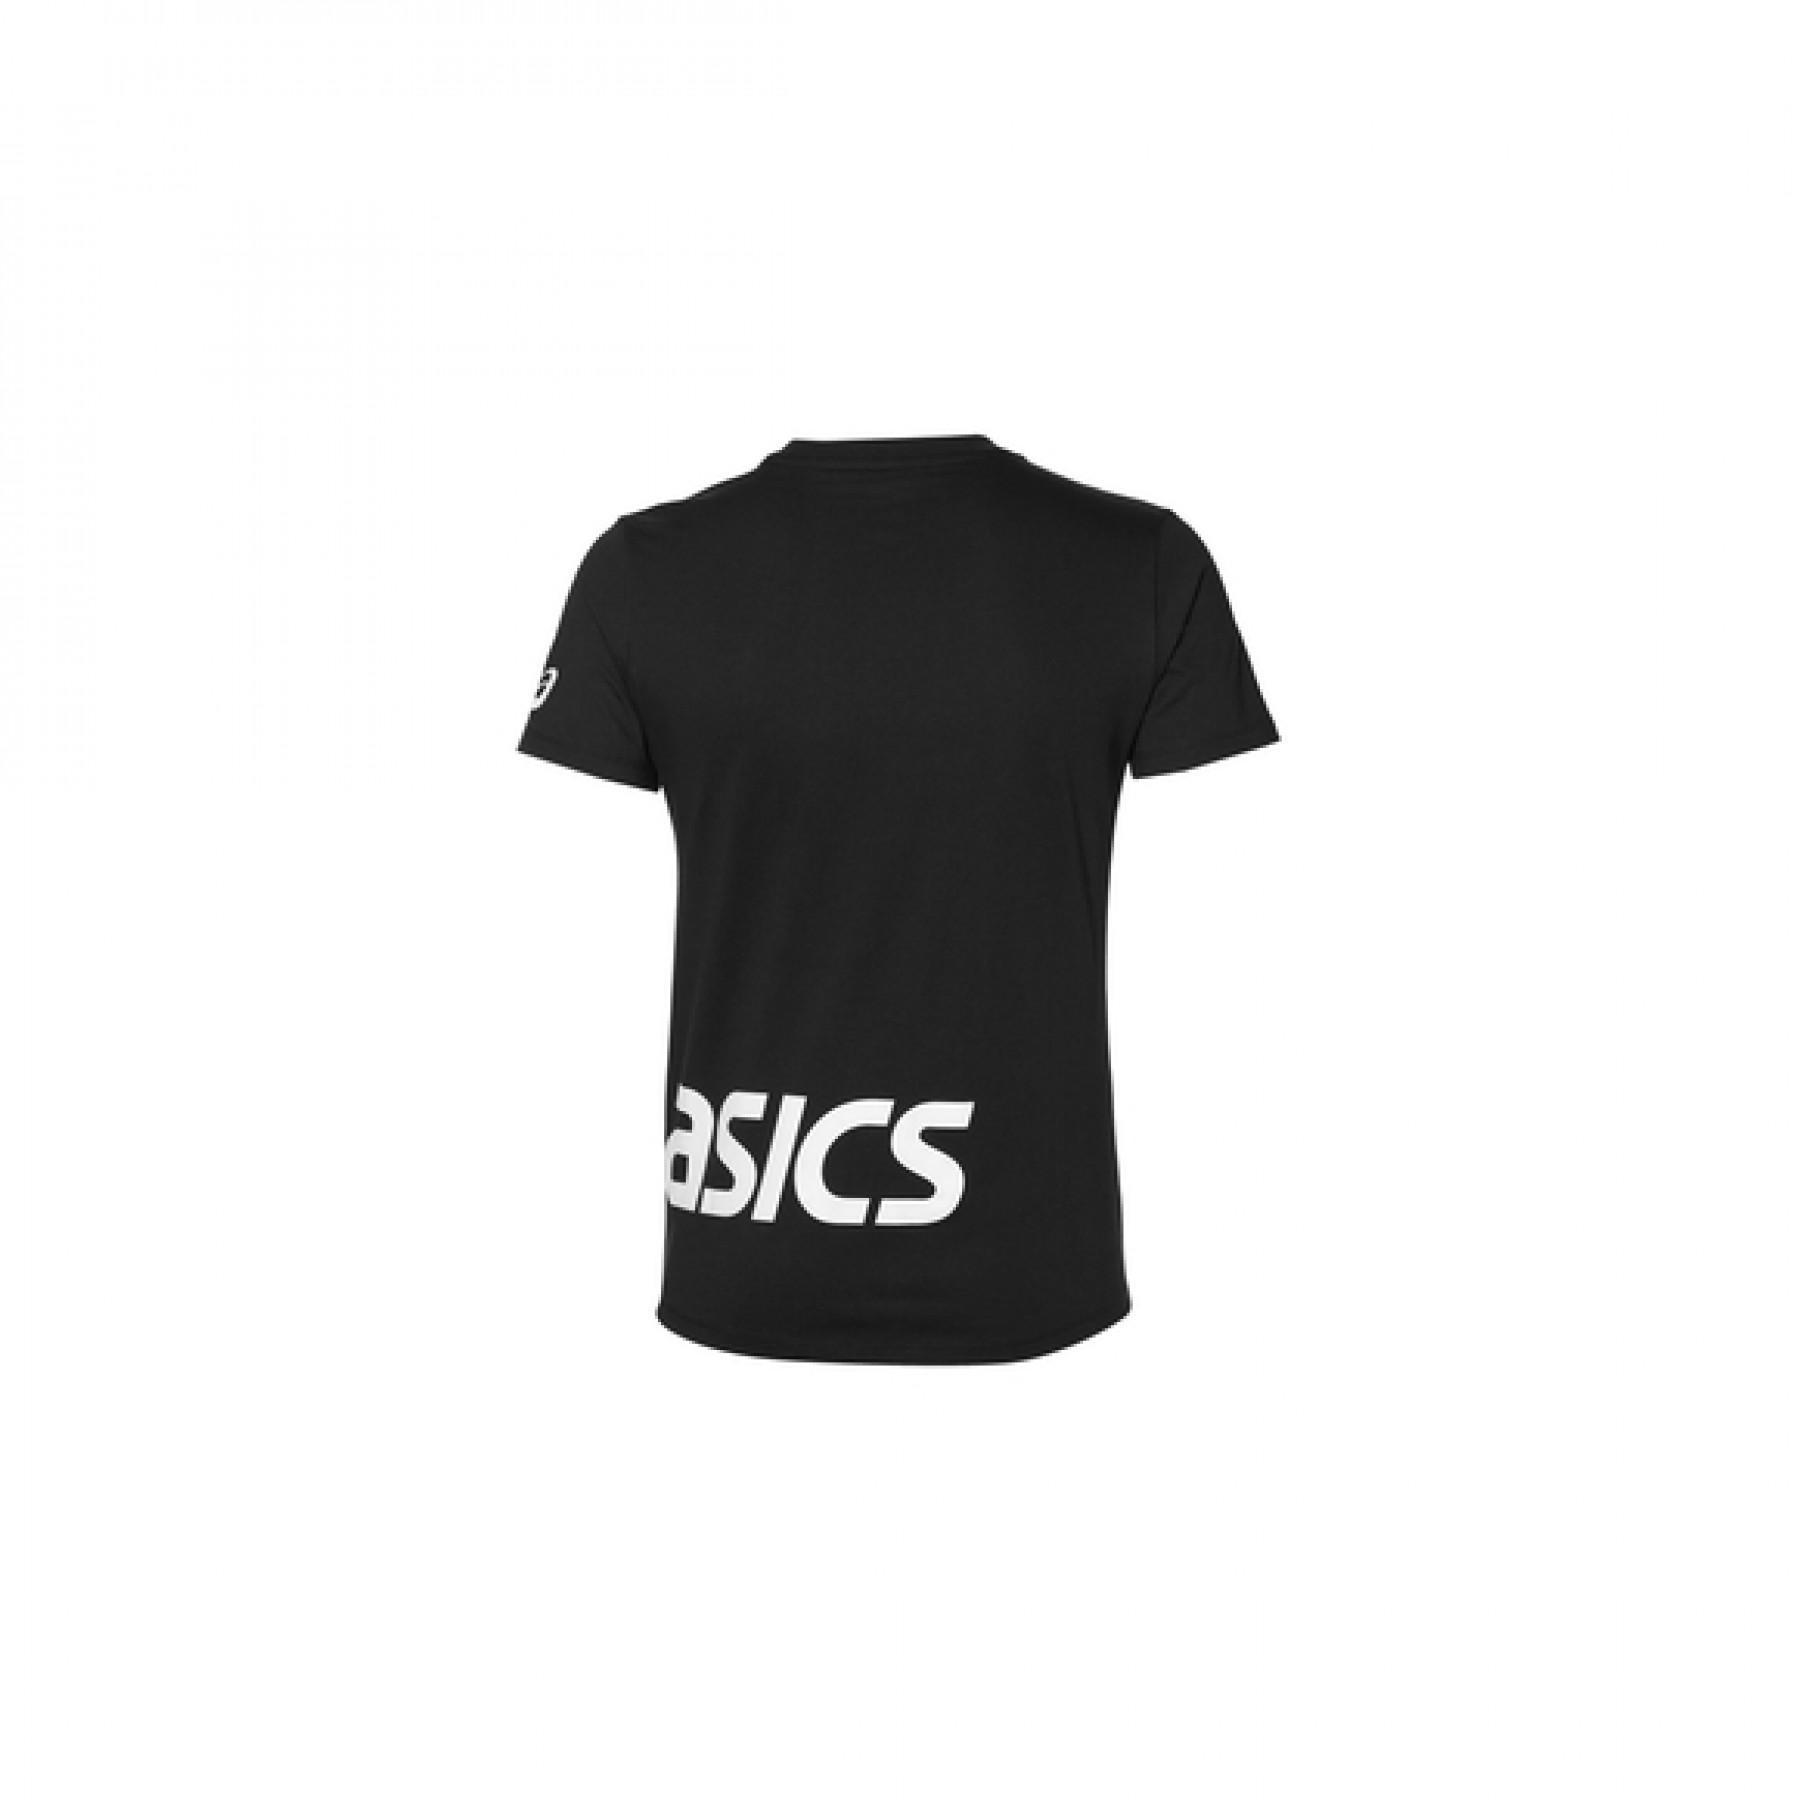 T-shirt Asics low big logo